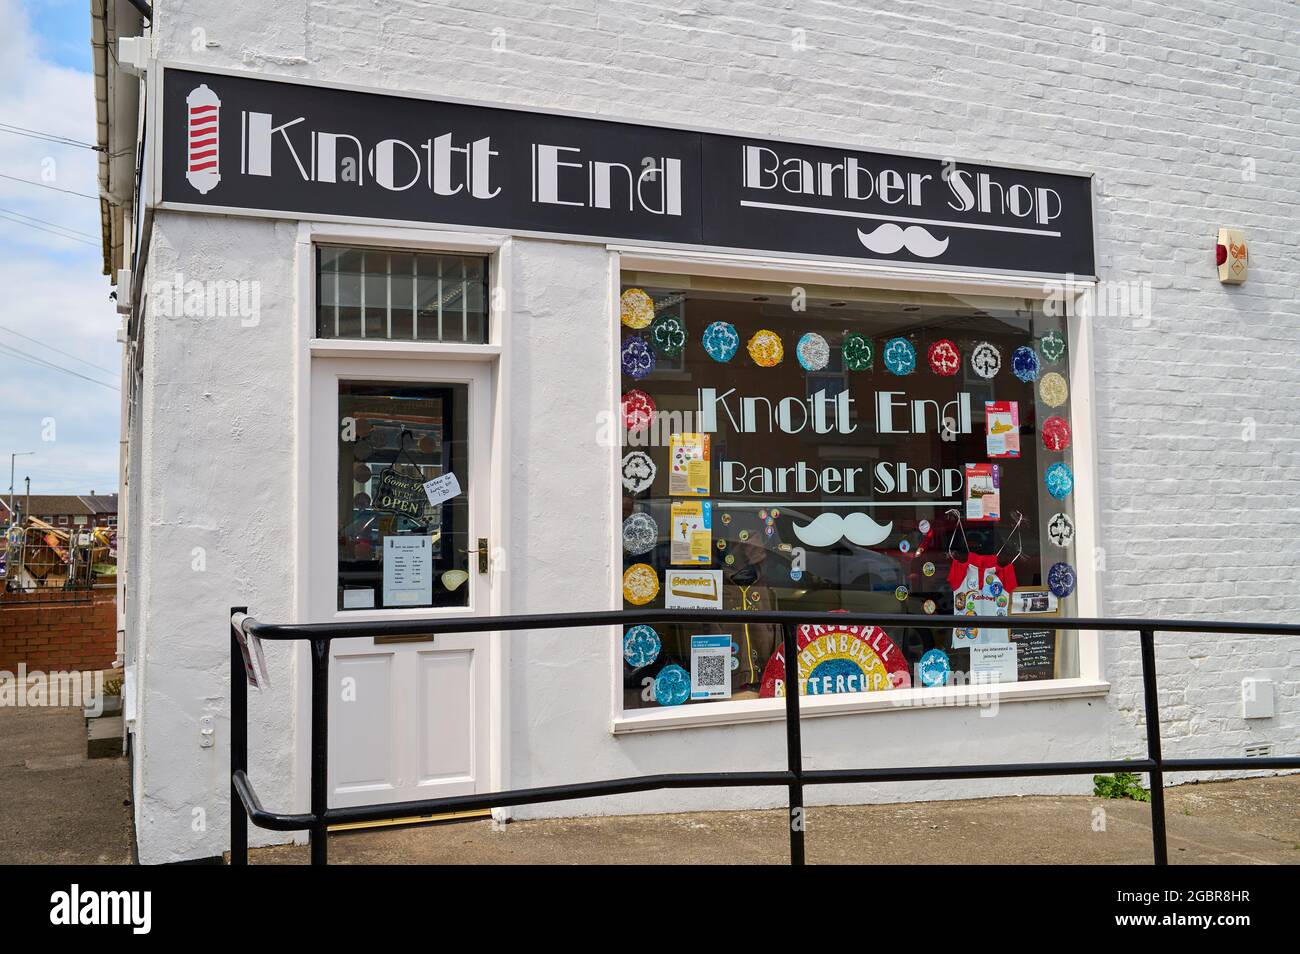 The Knott End on Sea barber shop window Stock Photo